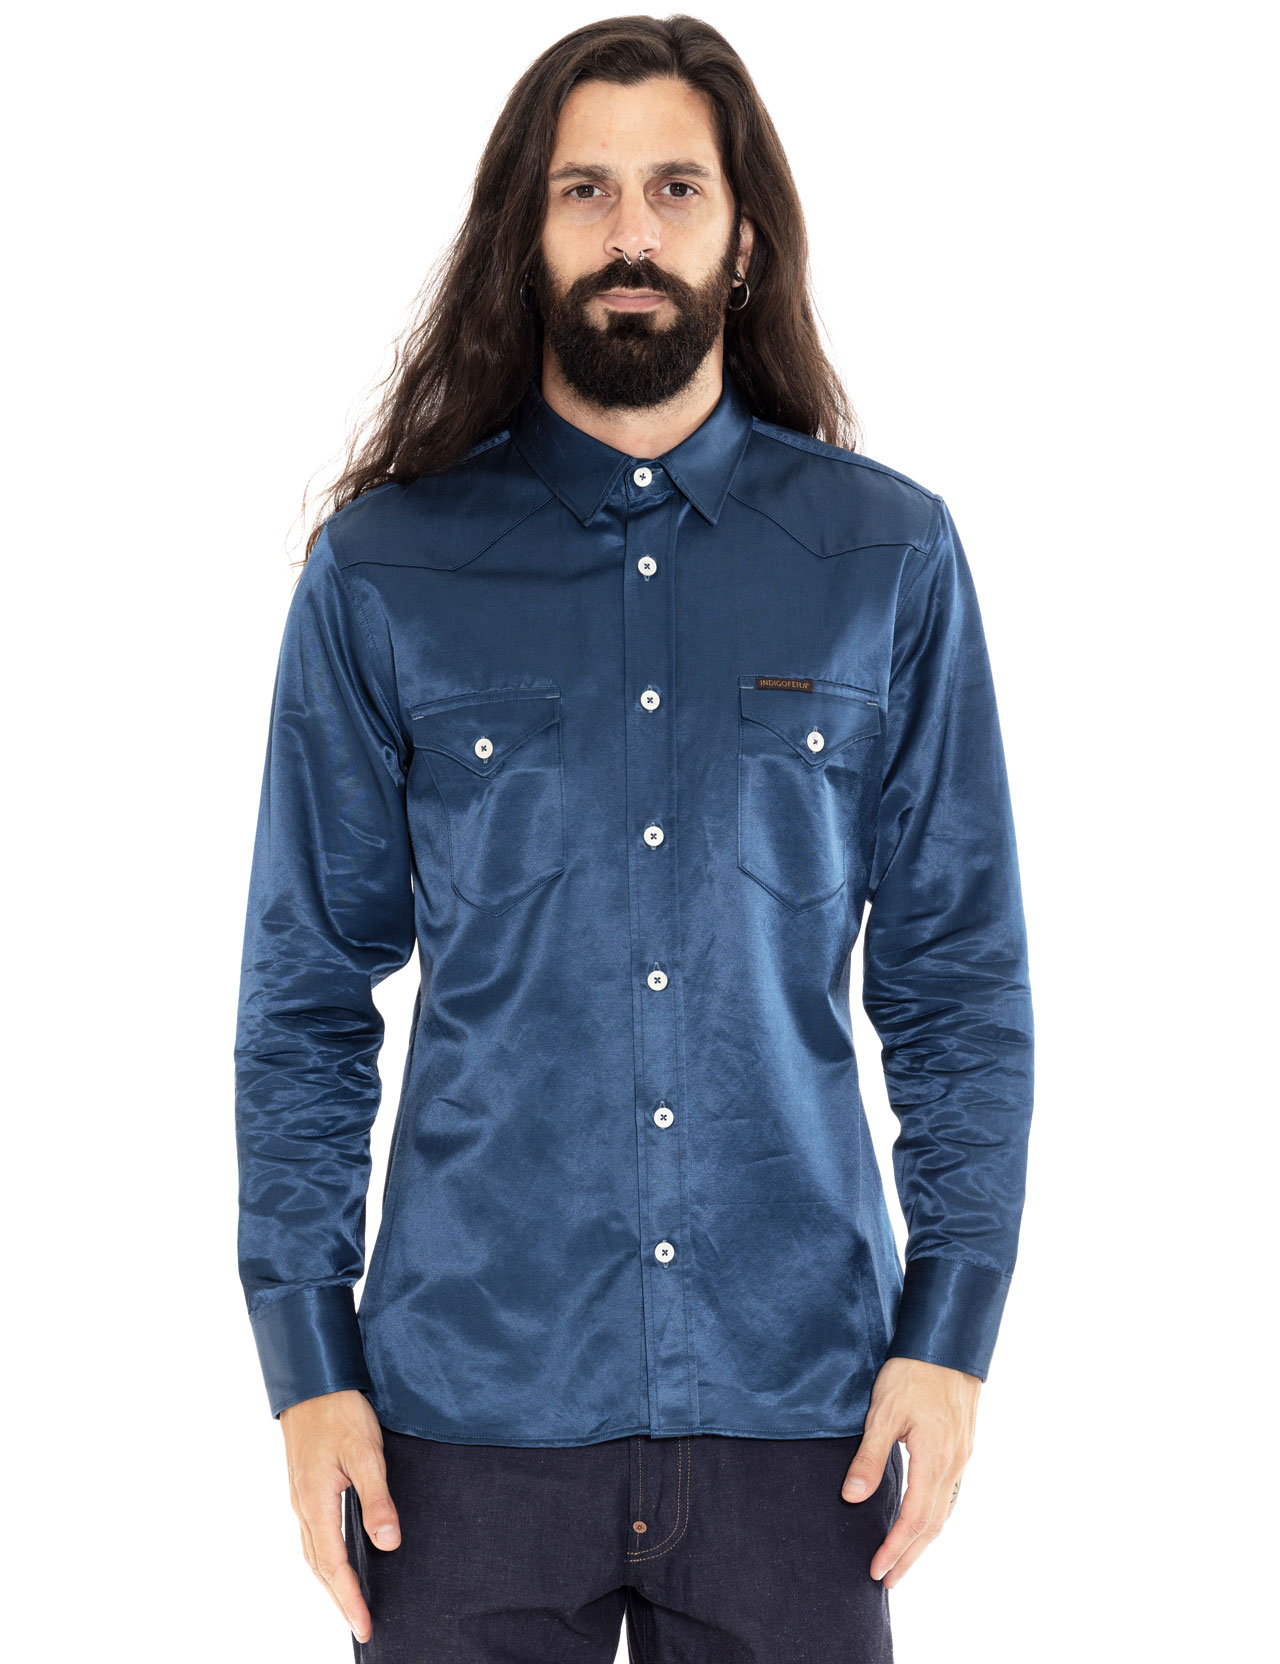 Indigofera - Reynolds Shirt Cotton/Rayon Twill - Royal Blue